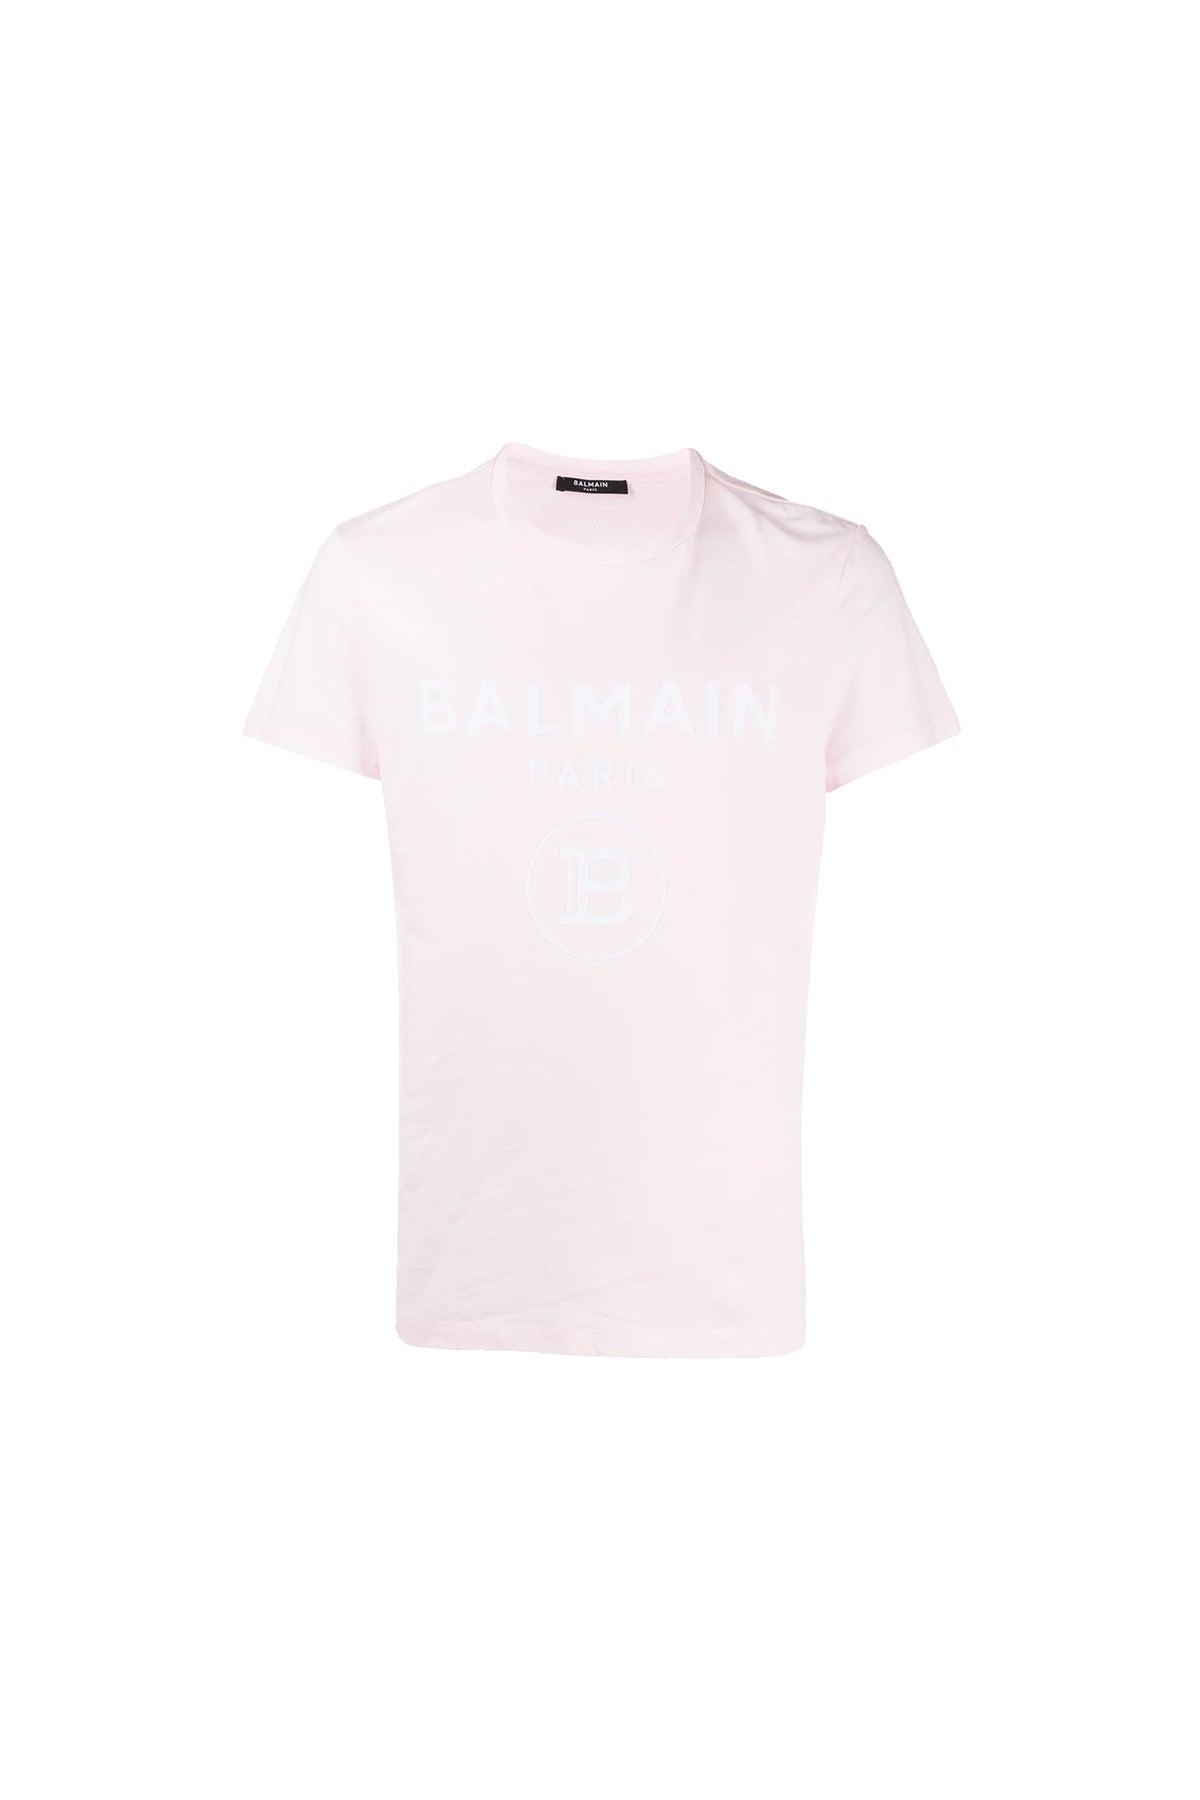 Balmain Pink Logo T-Shirt